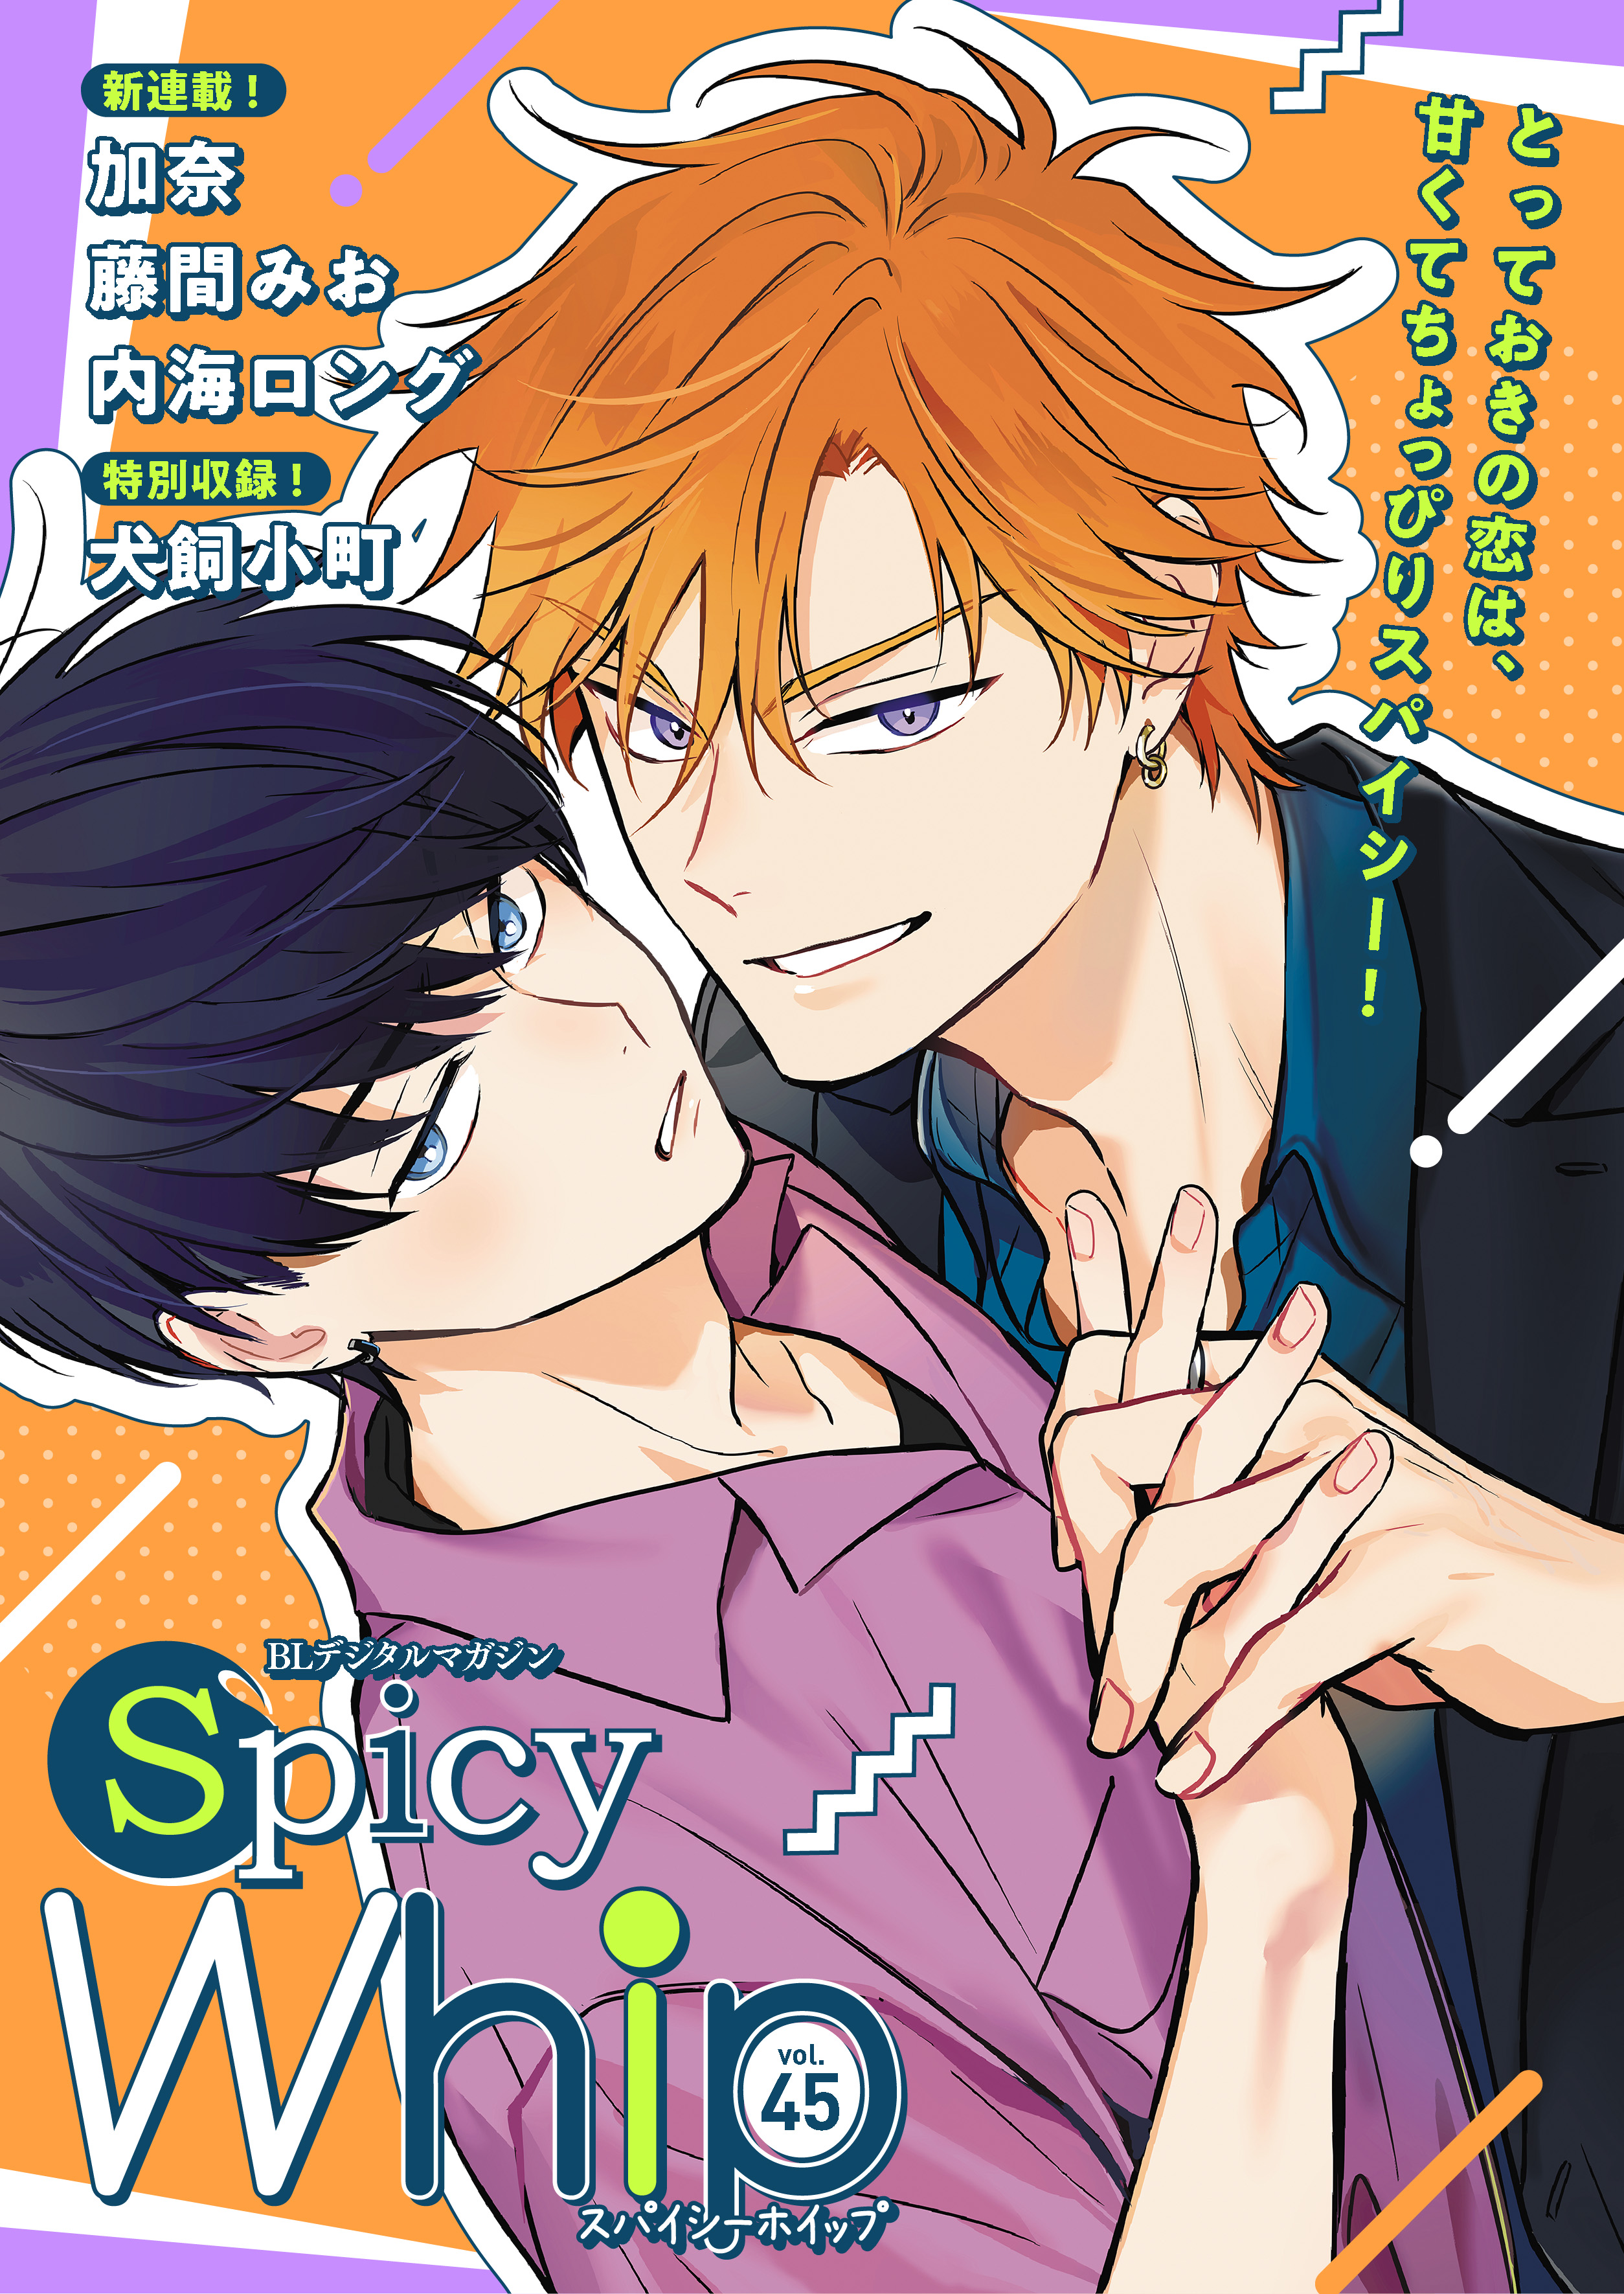 Spicy Whip vol.45(マンガ) - 電子書籍 | U-NEXT 初回600円分無料